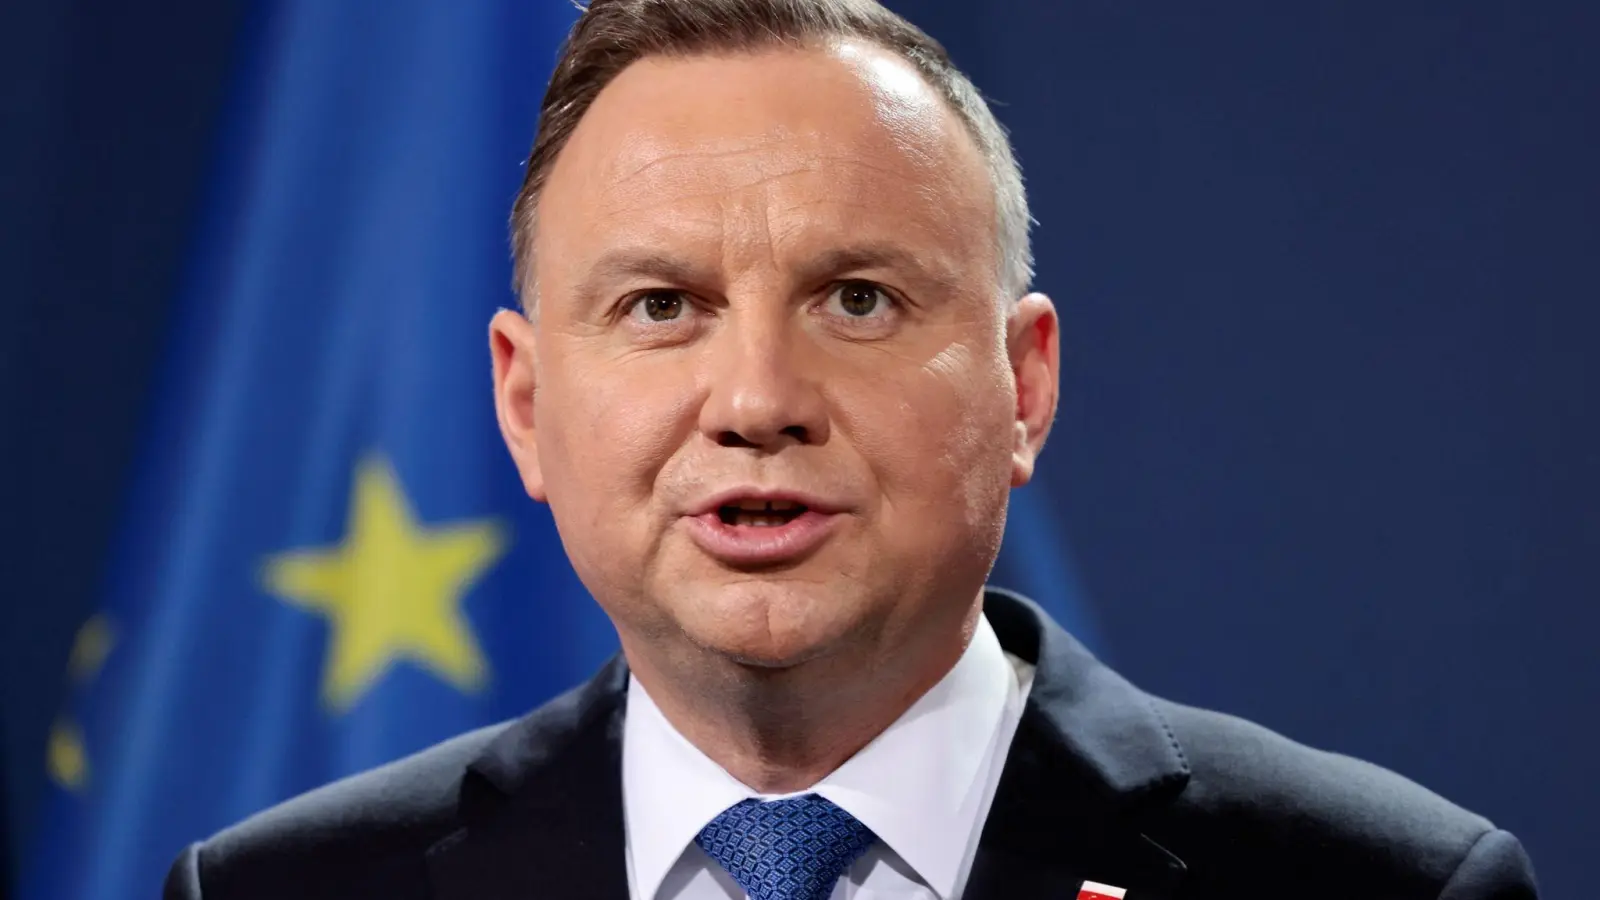 Zieht Vergleiche zu Hitler: Polens Präsident Duda kritisiert Scholz und Macron scharf. (Foto: Hannibal Hanschke/Reuters/Pool/dpa)